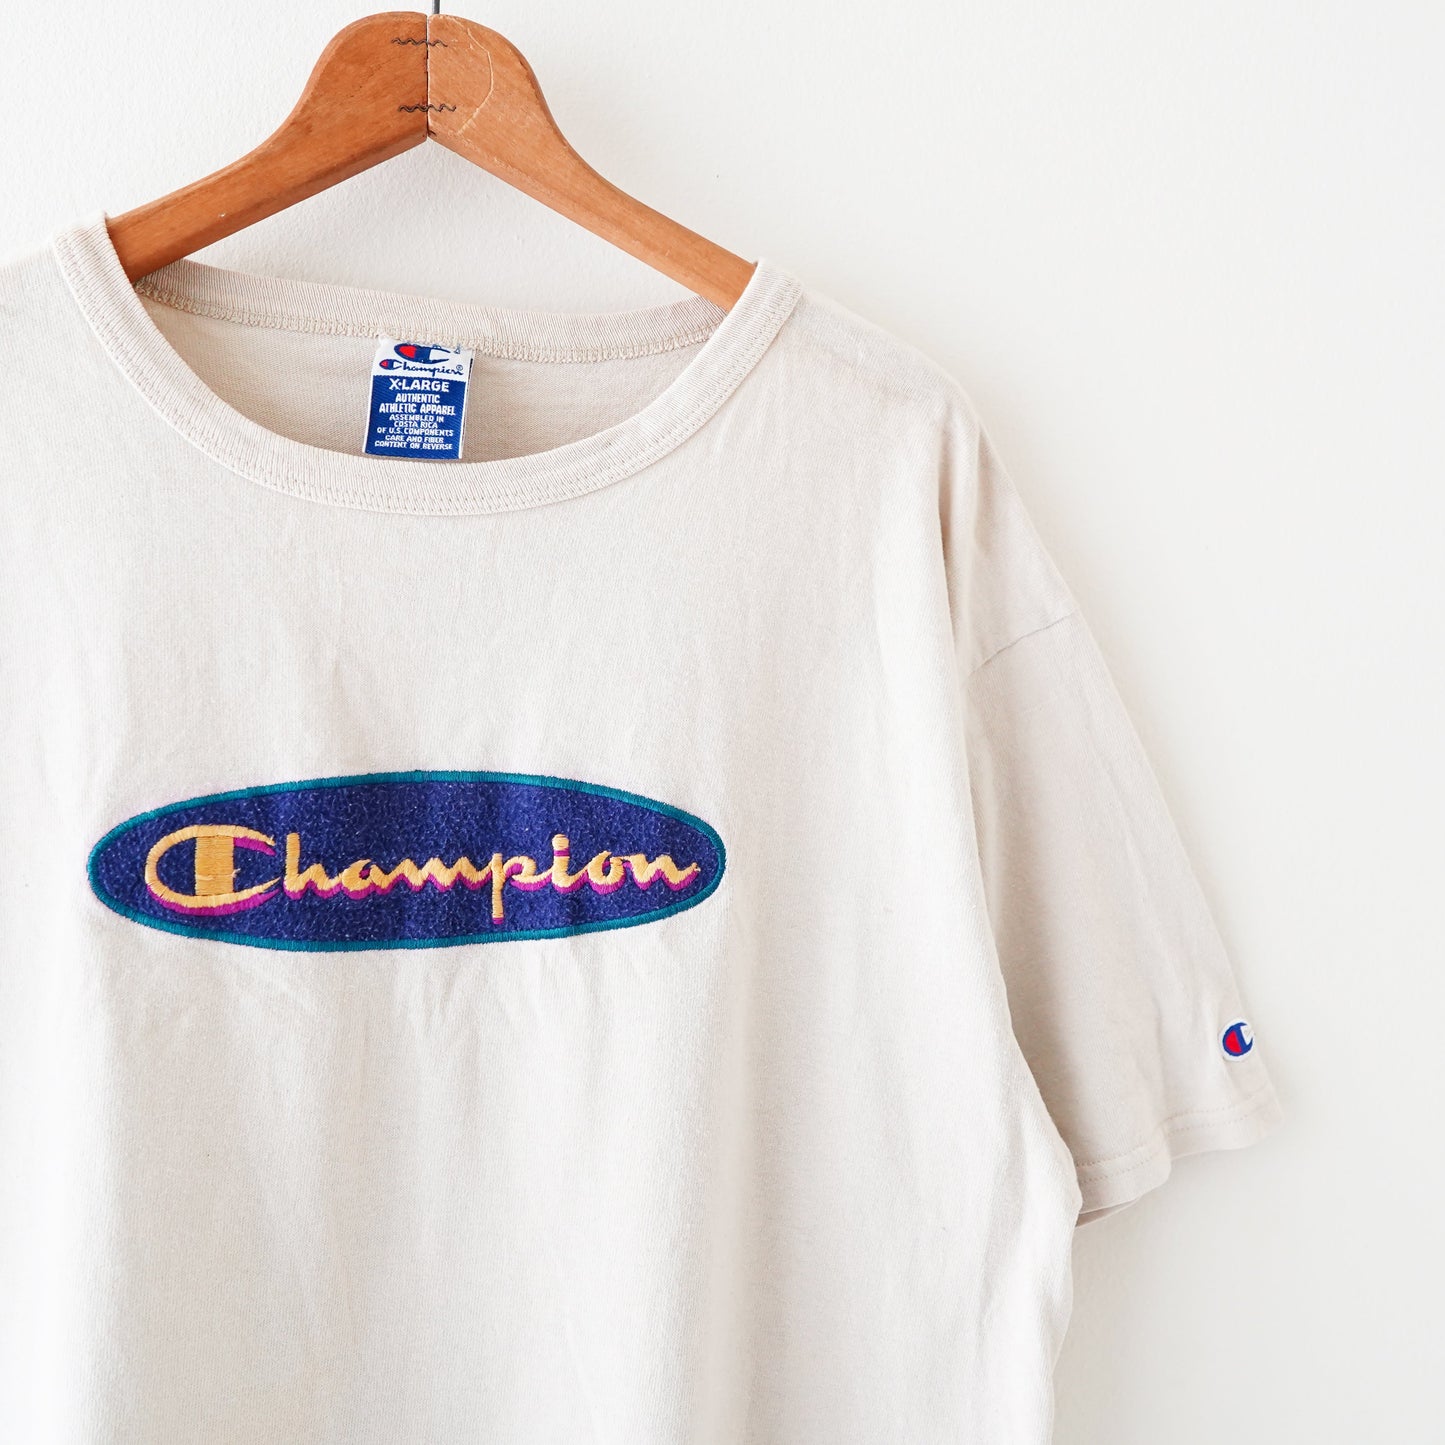 90s Champion tee